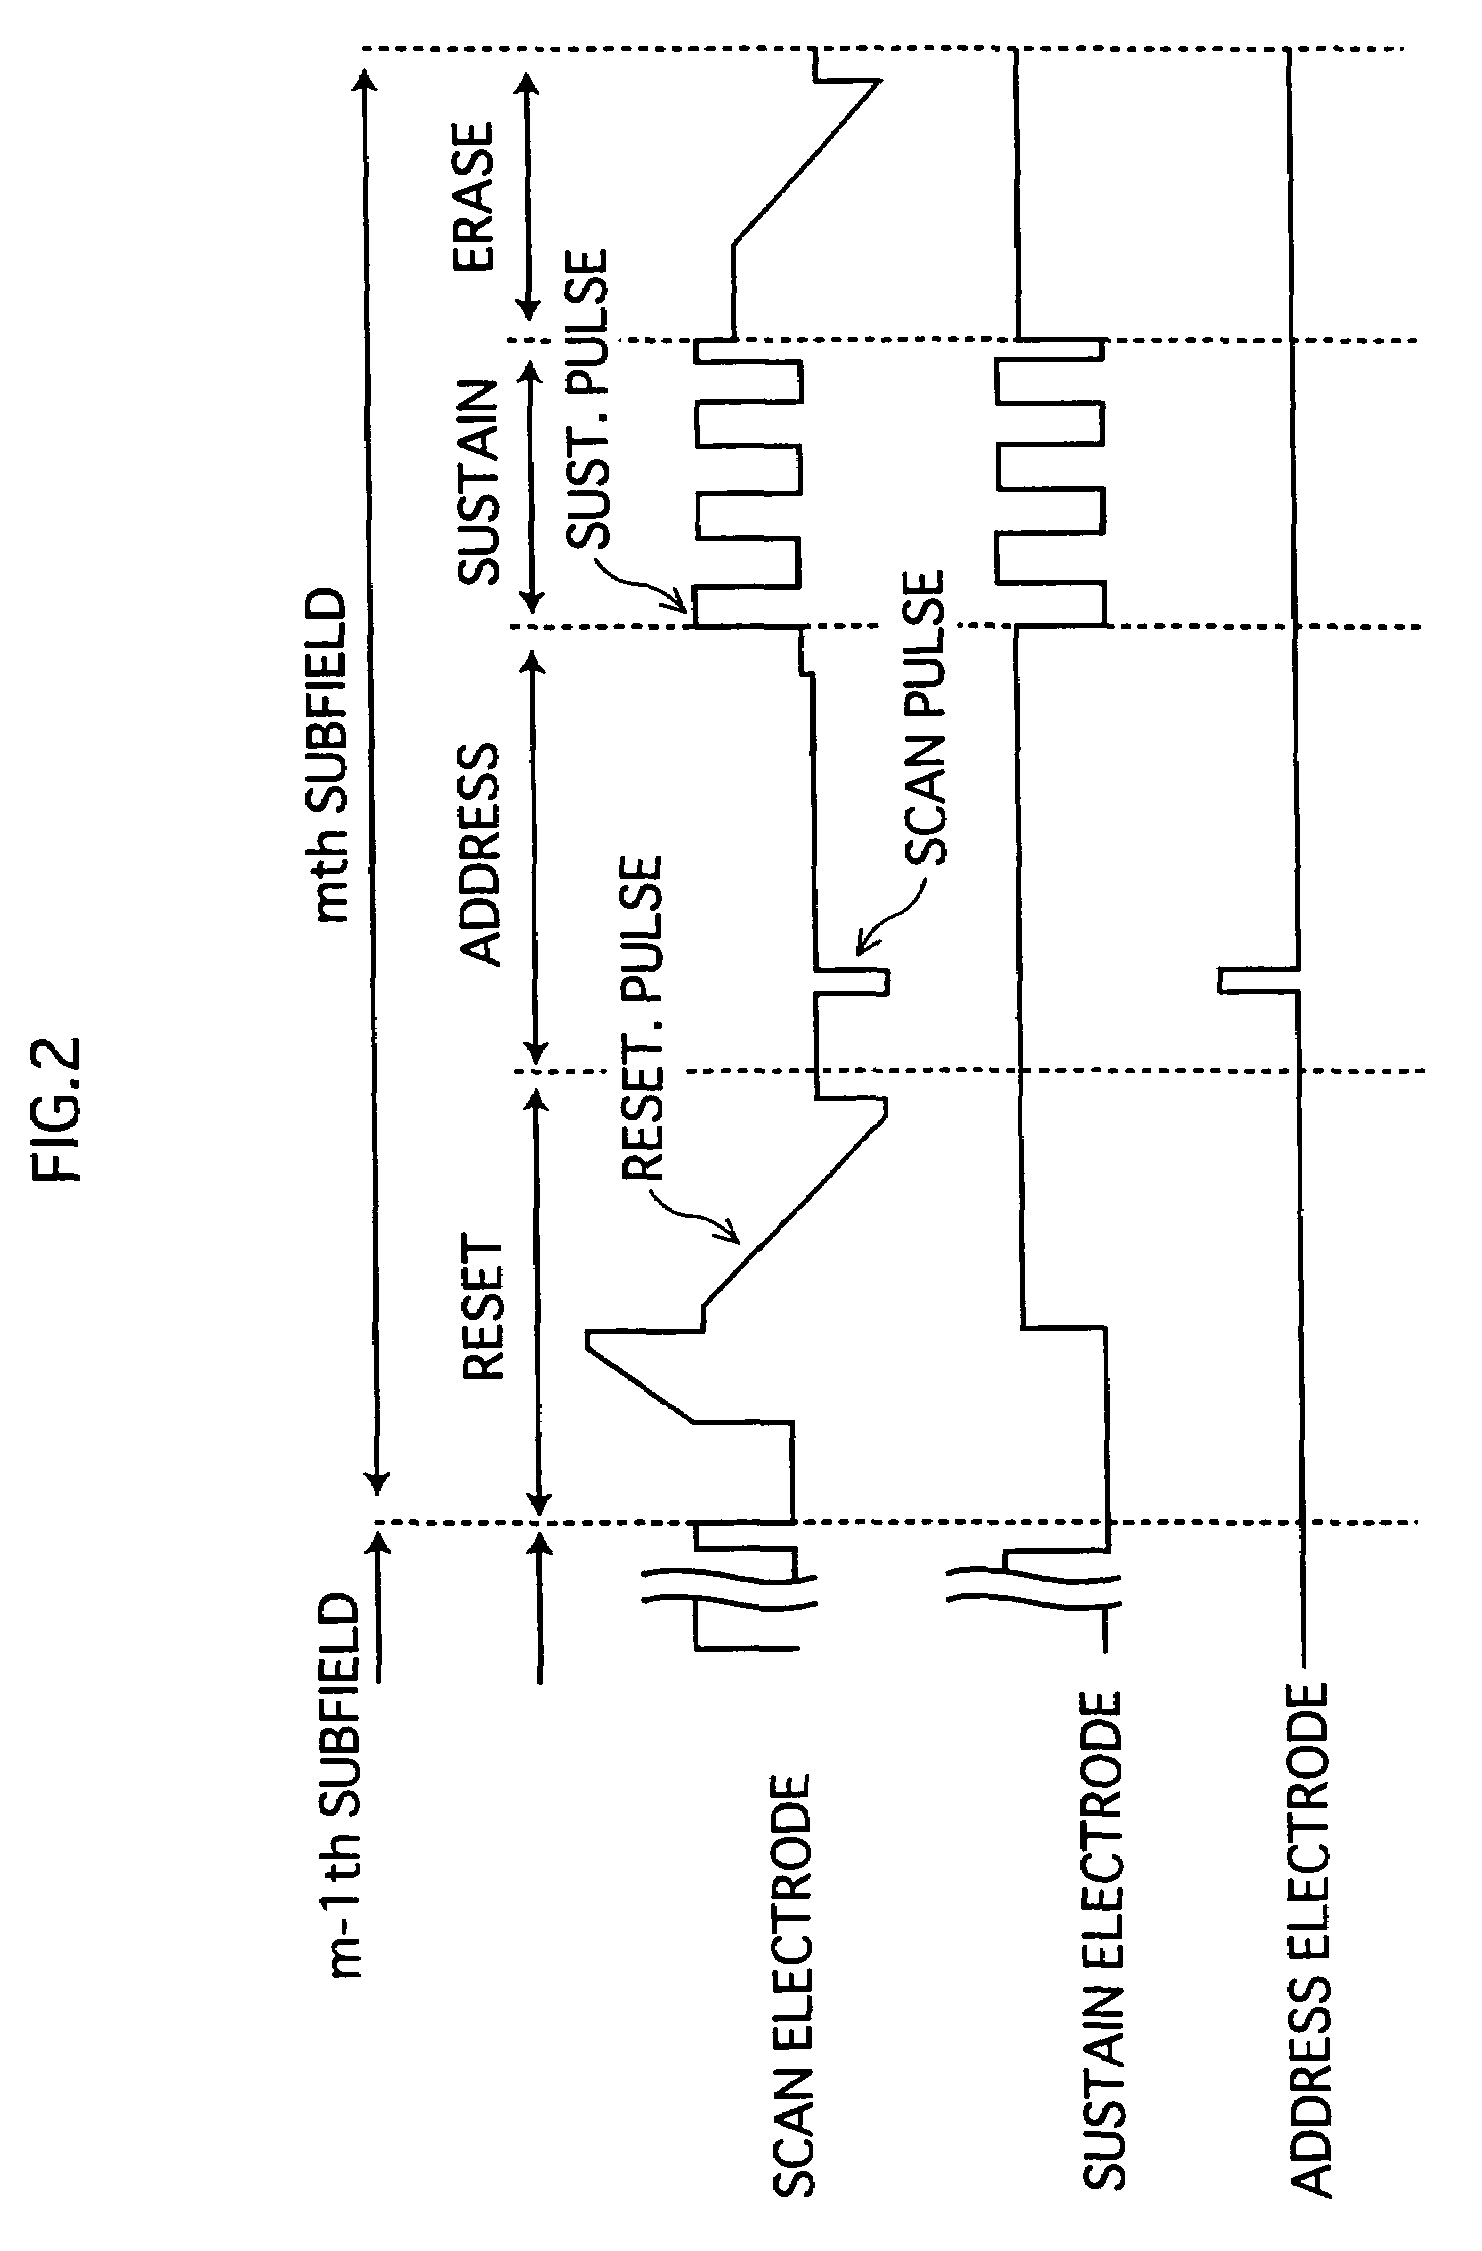 Plasma display panel and method for manufacturing same